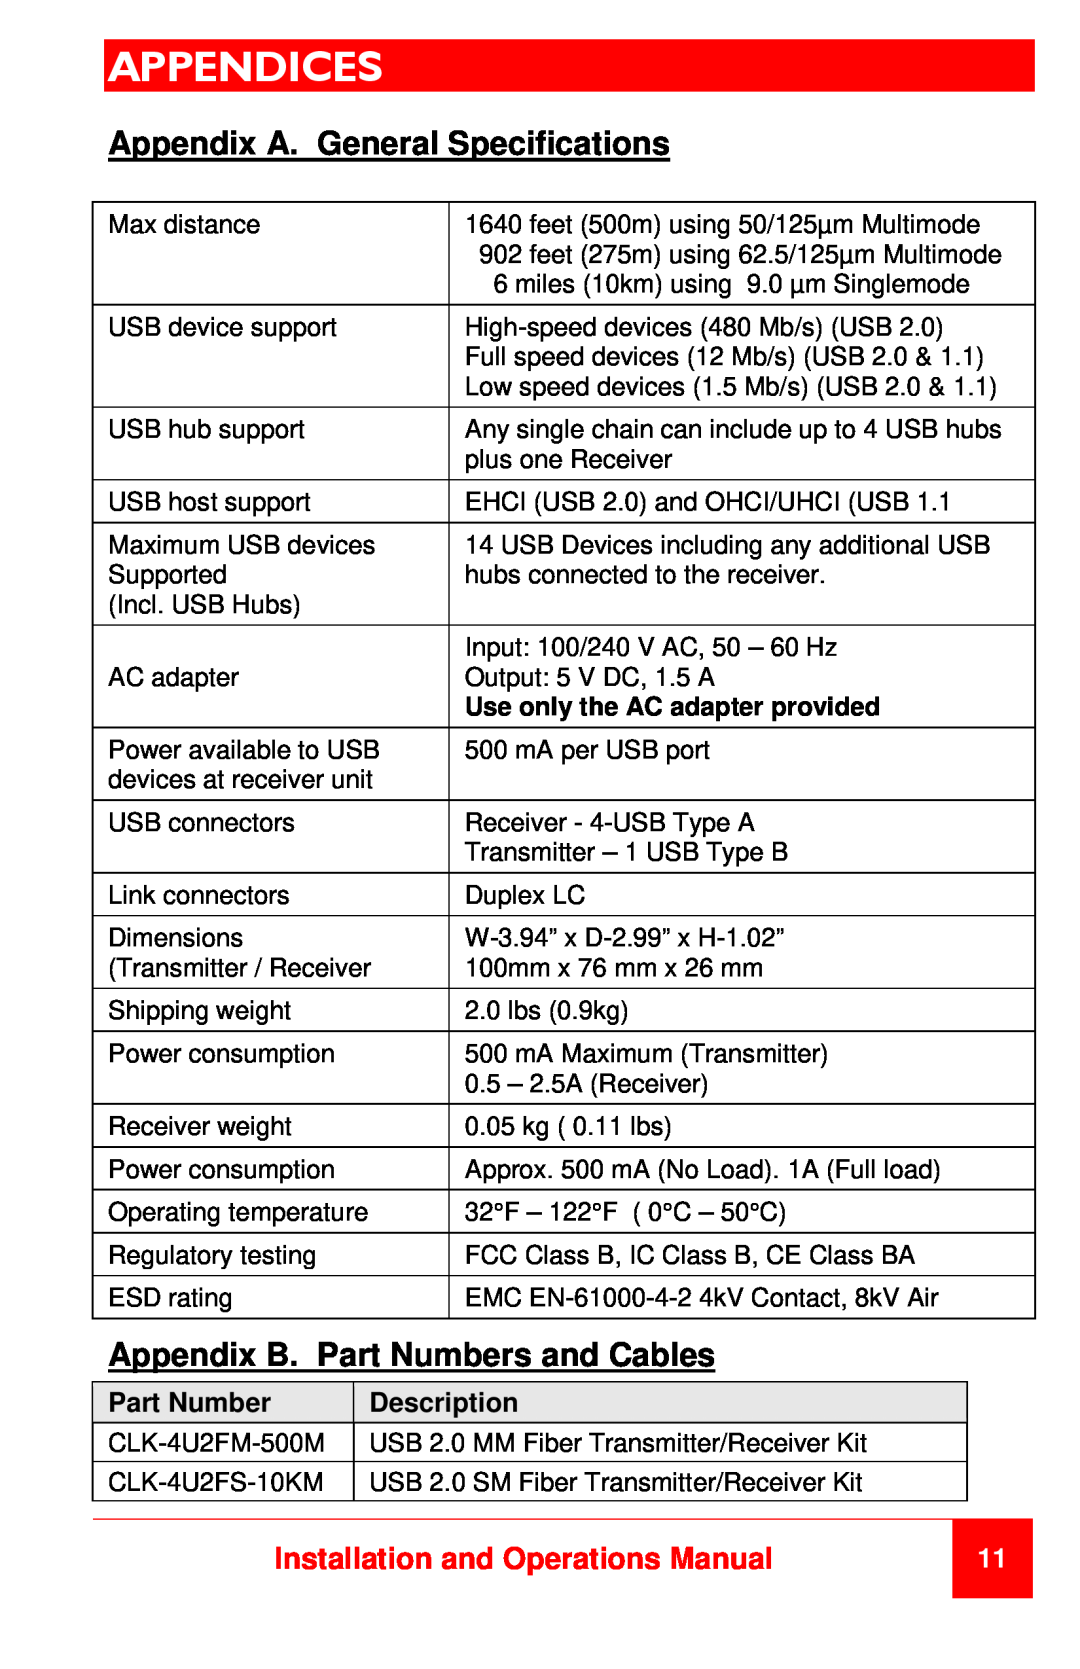 Rose electronic CLK-4U2FM-500M manual Appendices, Appendix A. General Specifications, Appendix B. Part Numbers and Cables 